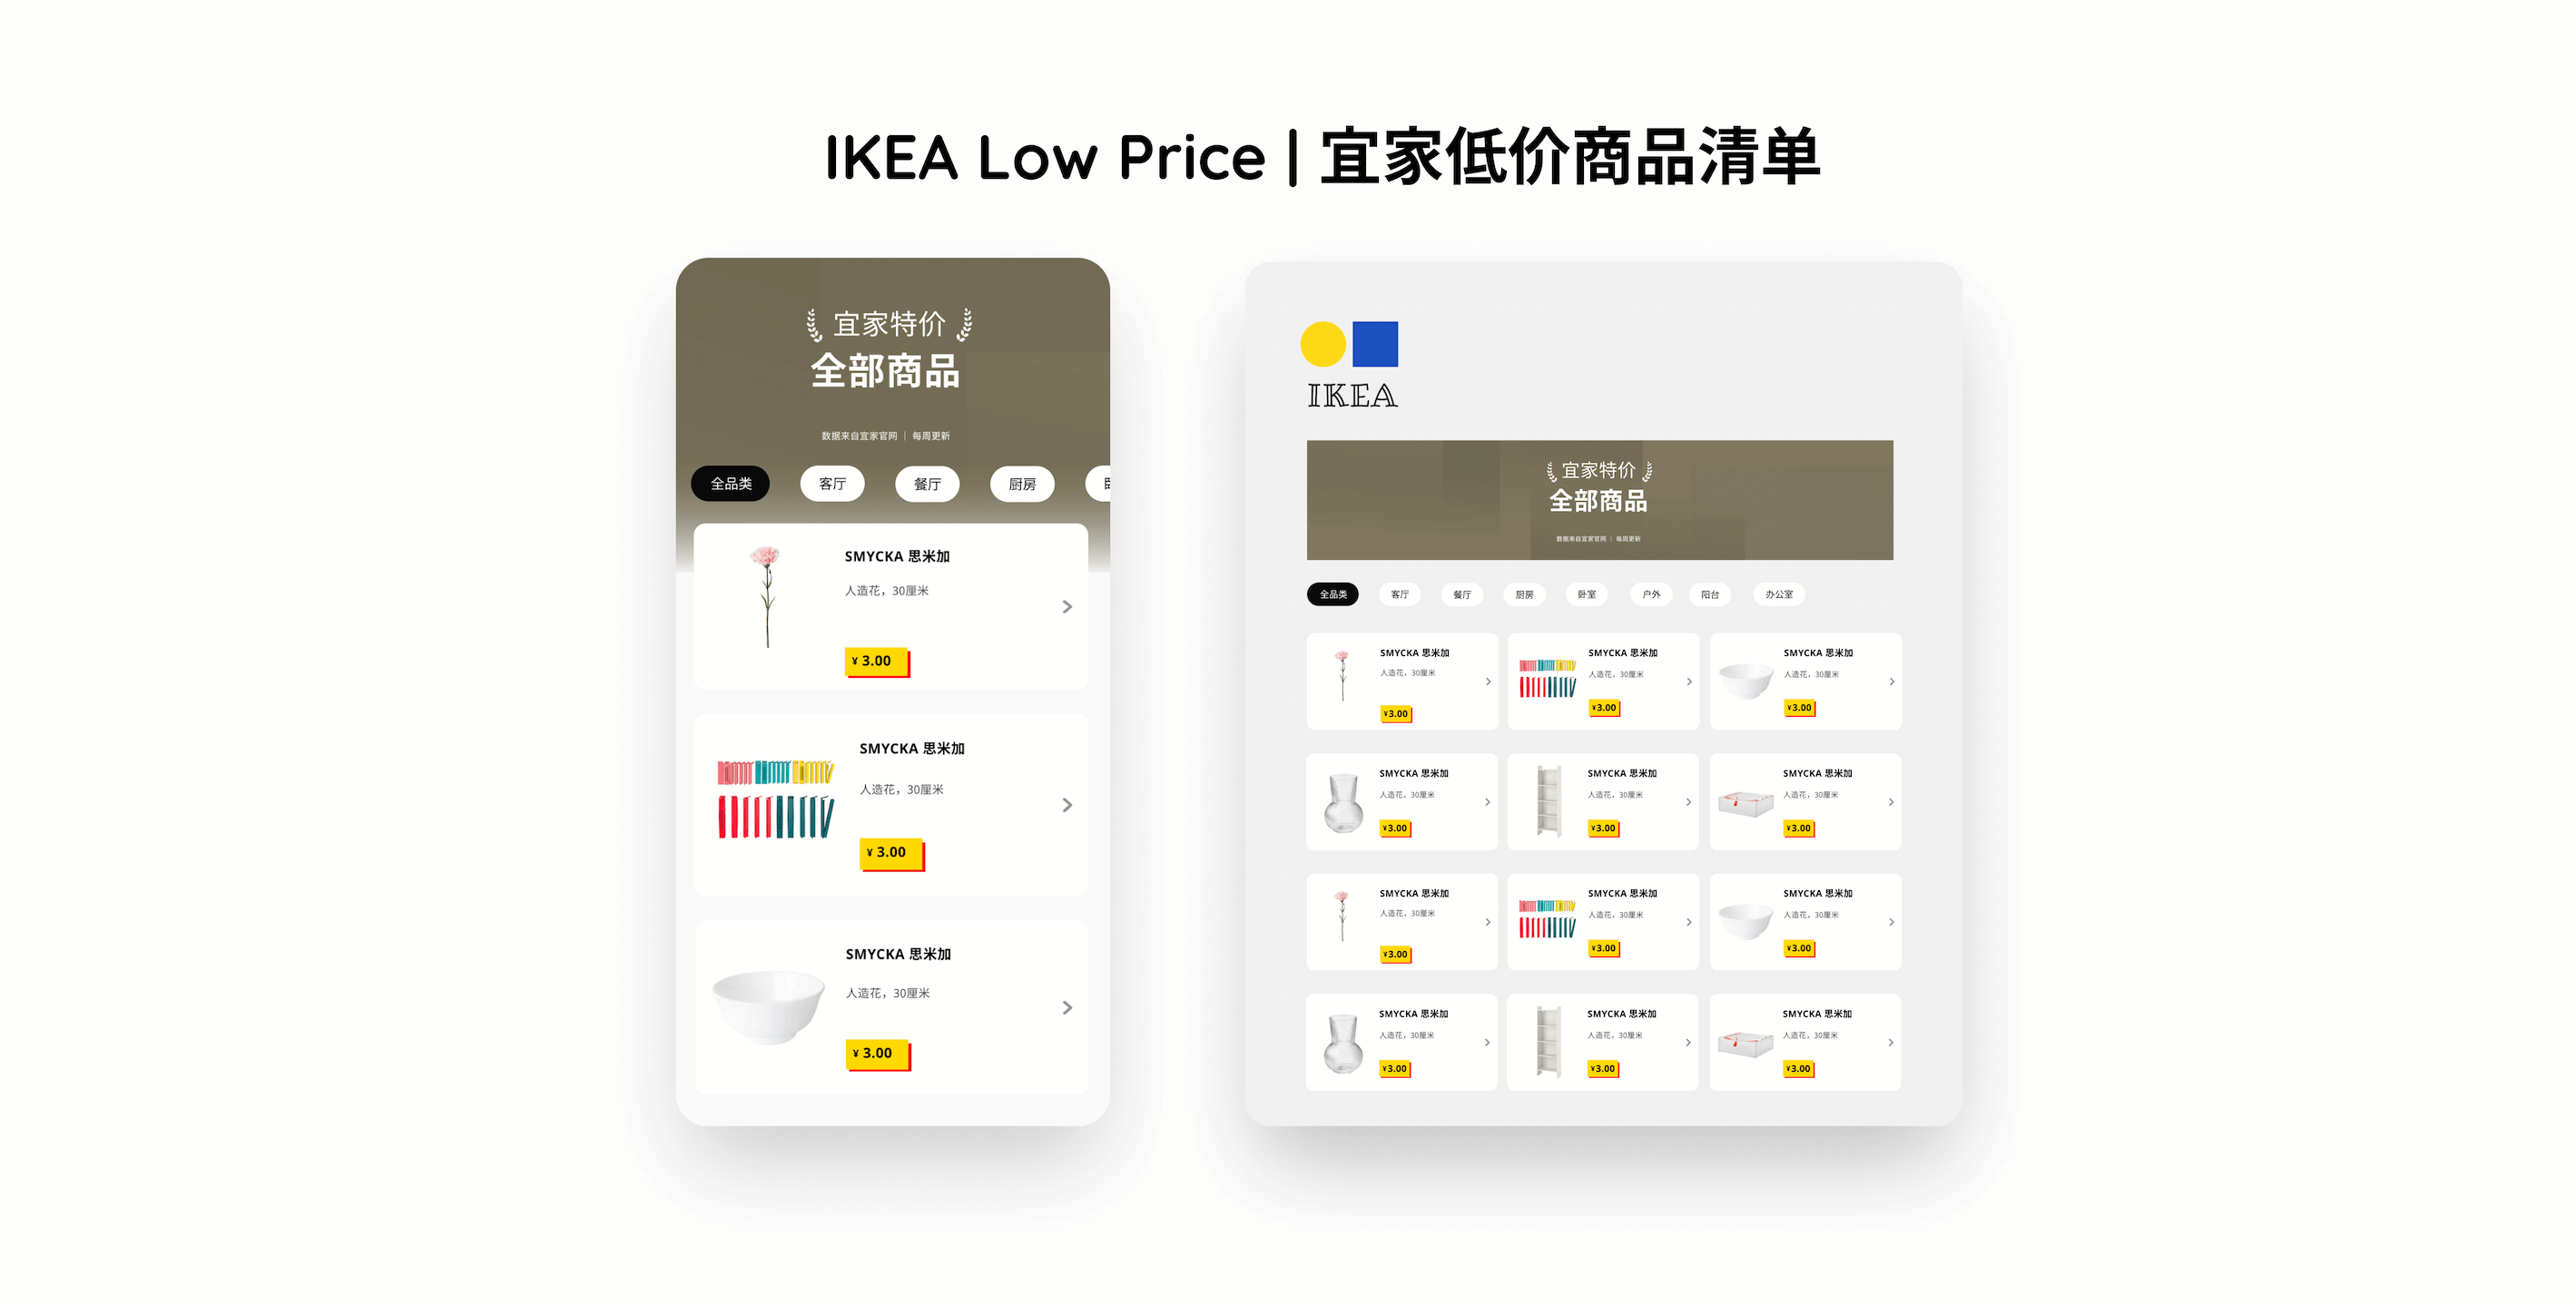 ikea-low-price